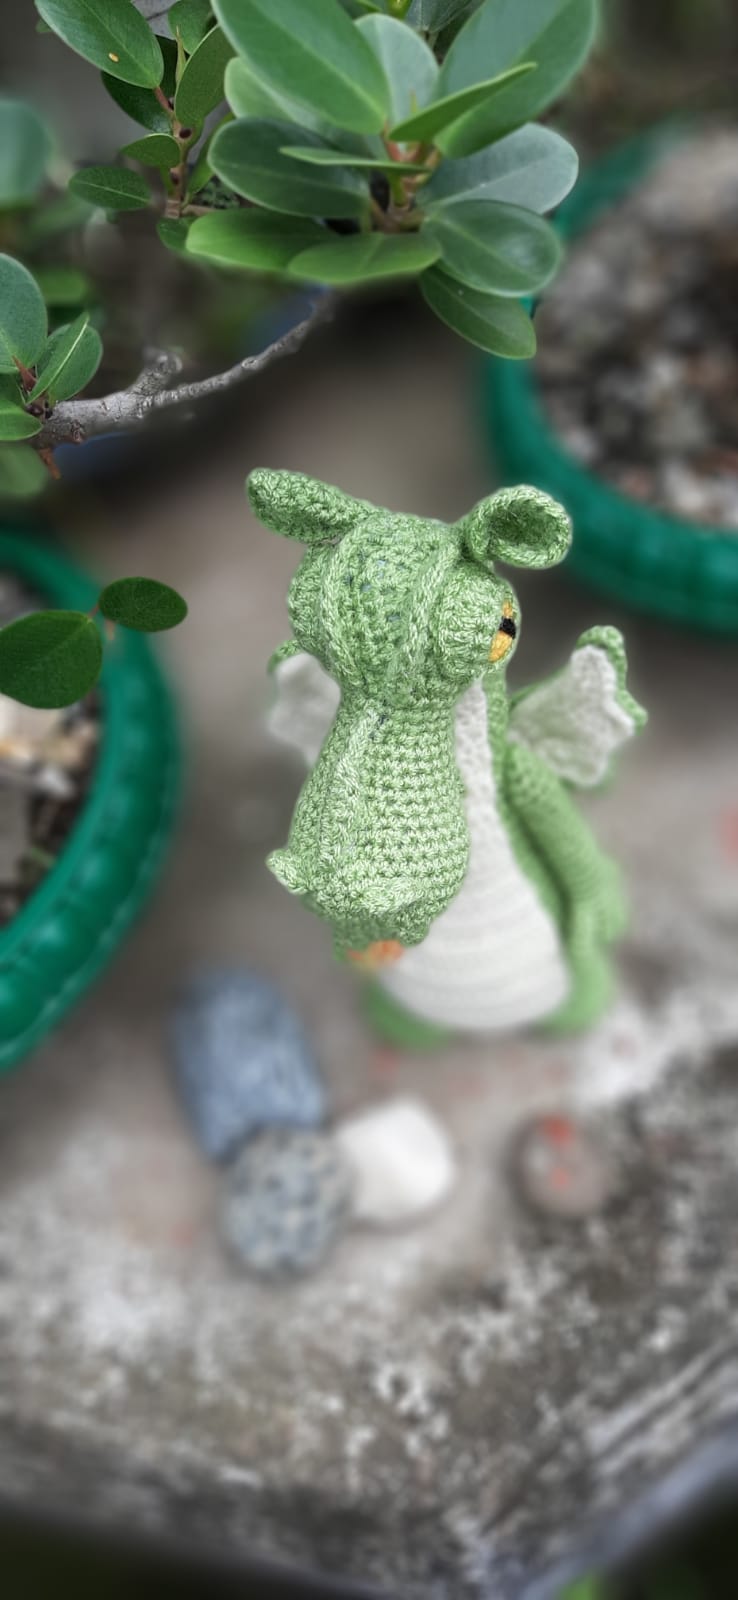 Crochet Dragon plushy soft toy doll handmade